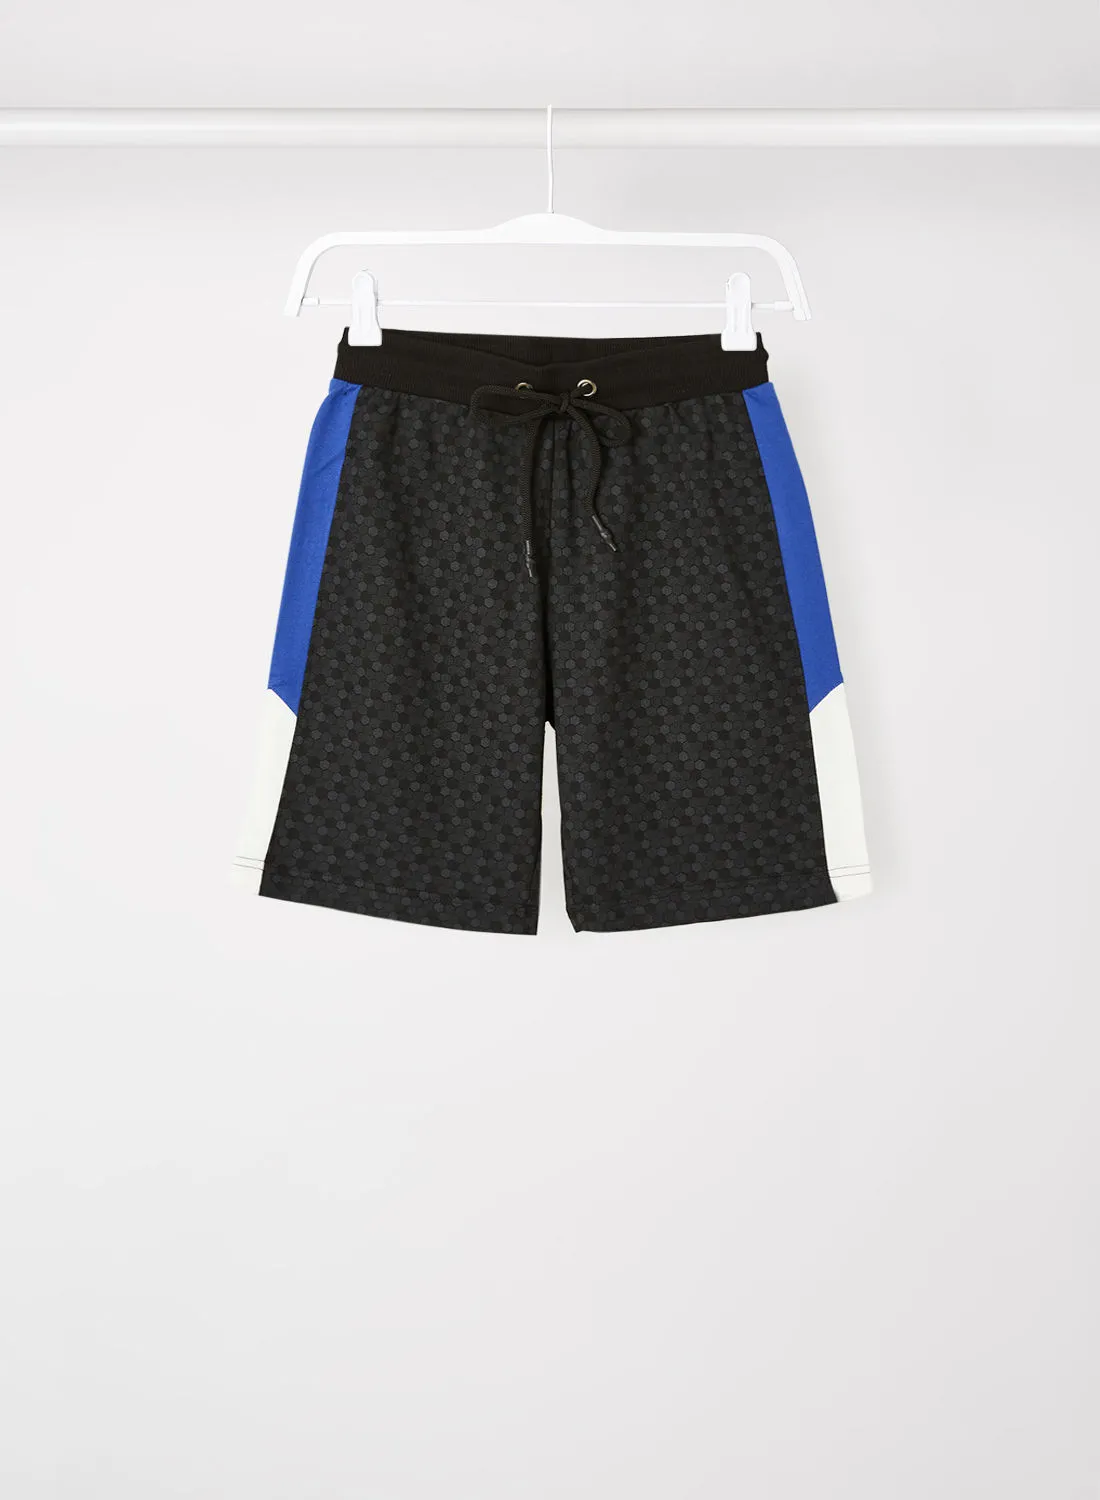 ABOF All Over Printed Elastic Waistband Drawstring Shorts Black/Blue/White